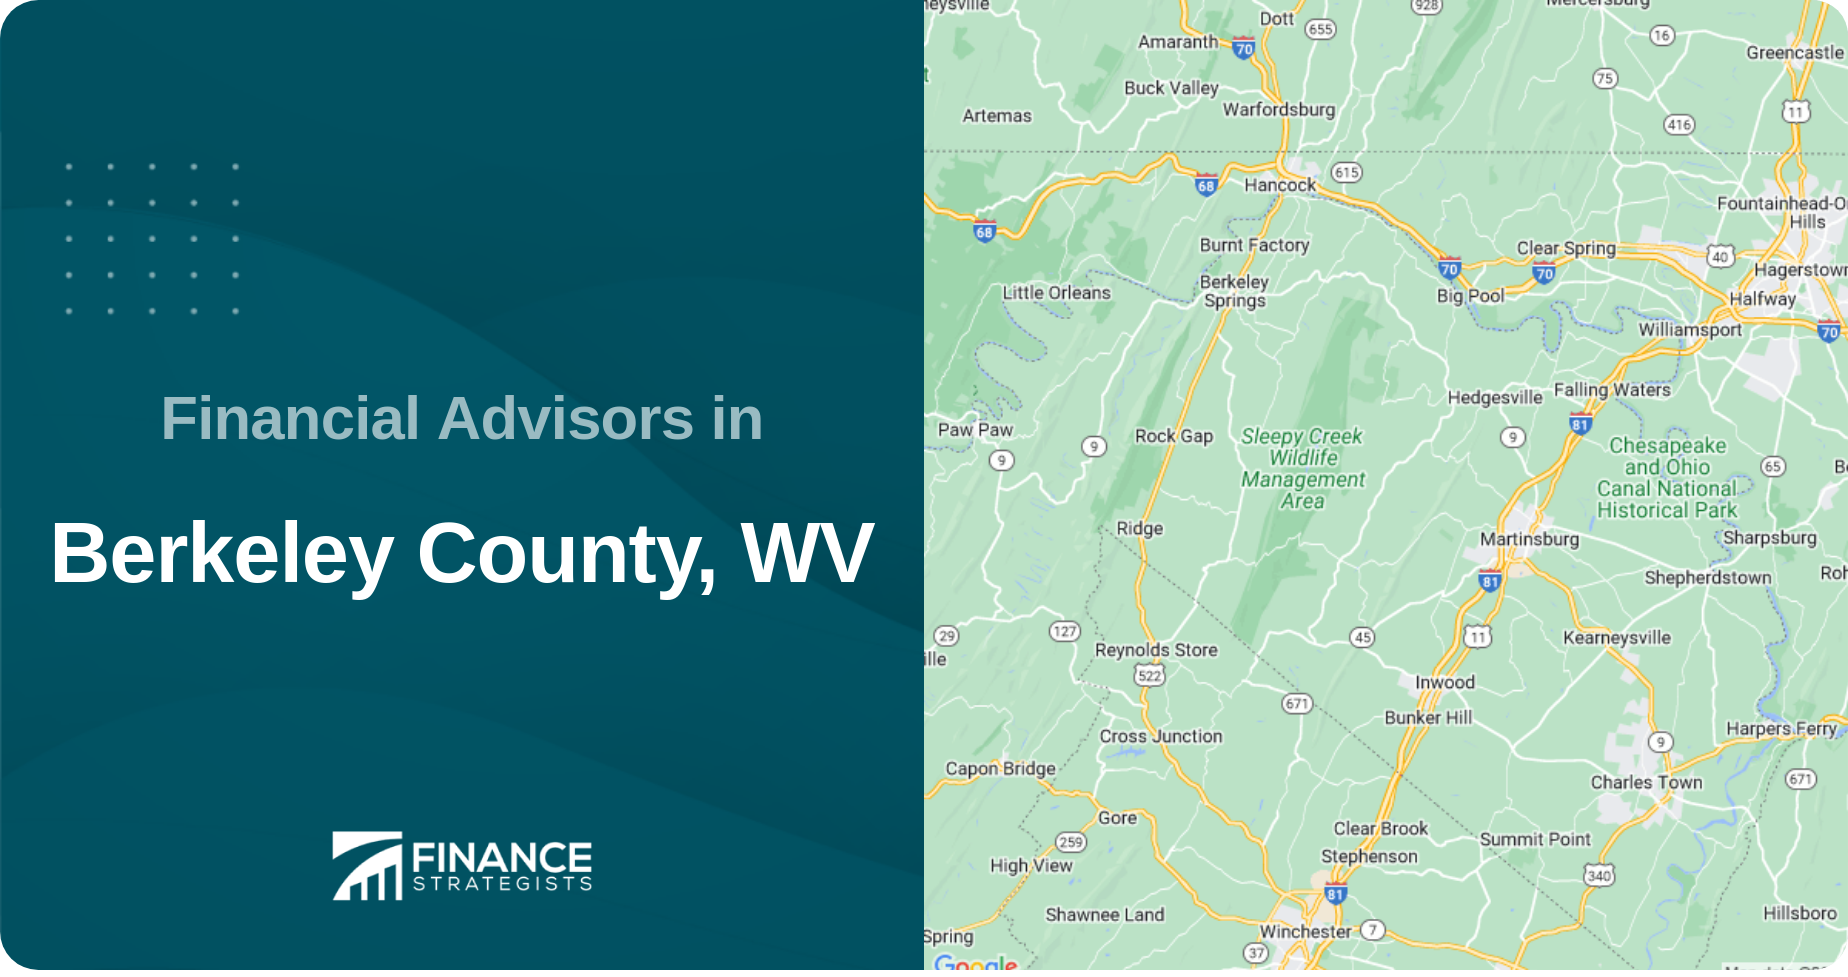 Financial Advisors in Berkeley County, WV